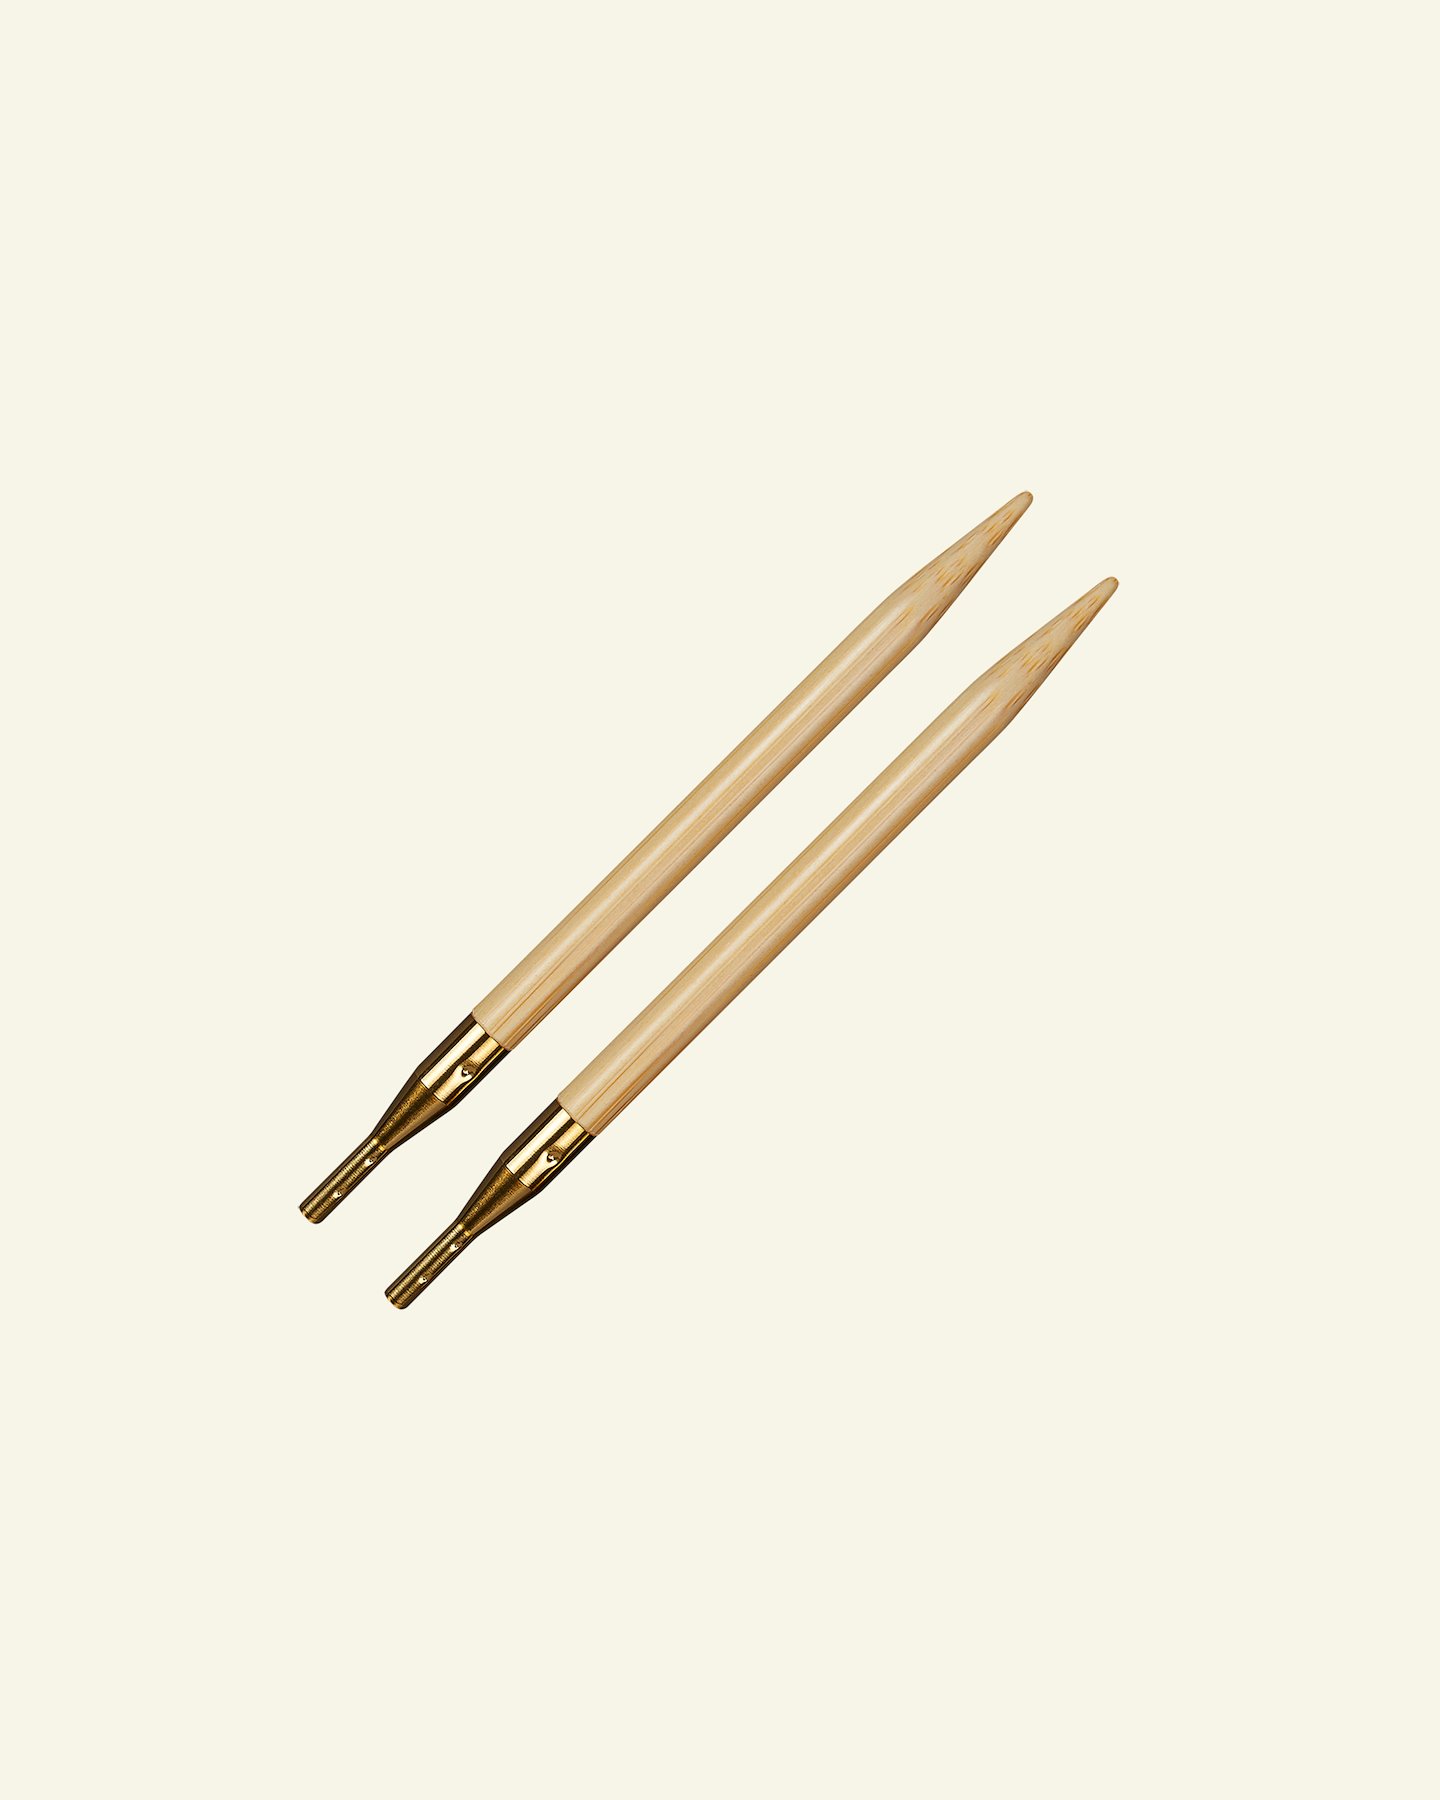 addiClick bambuspind str 5,5 mm. 1sæt 83285_pack